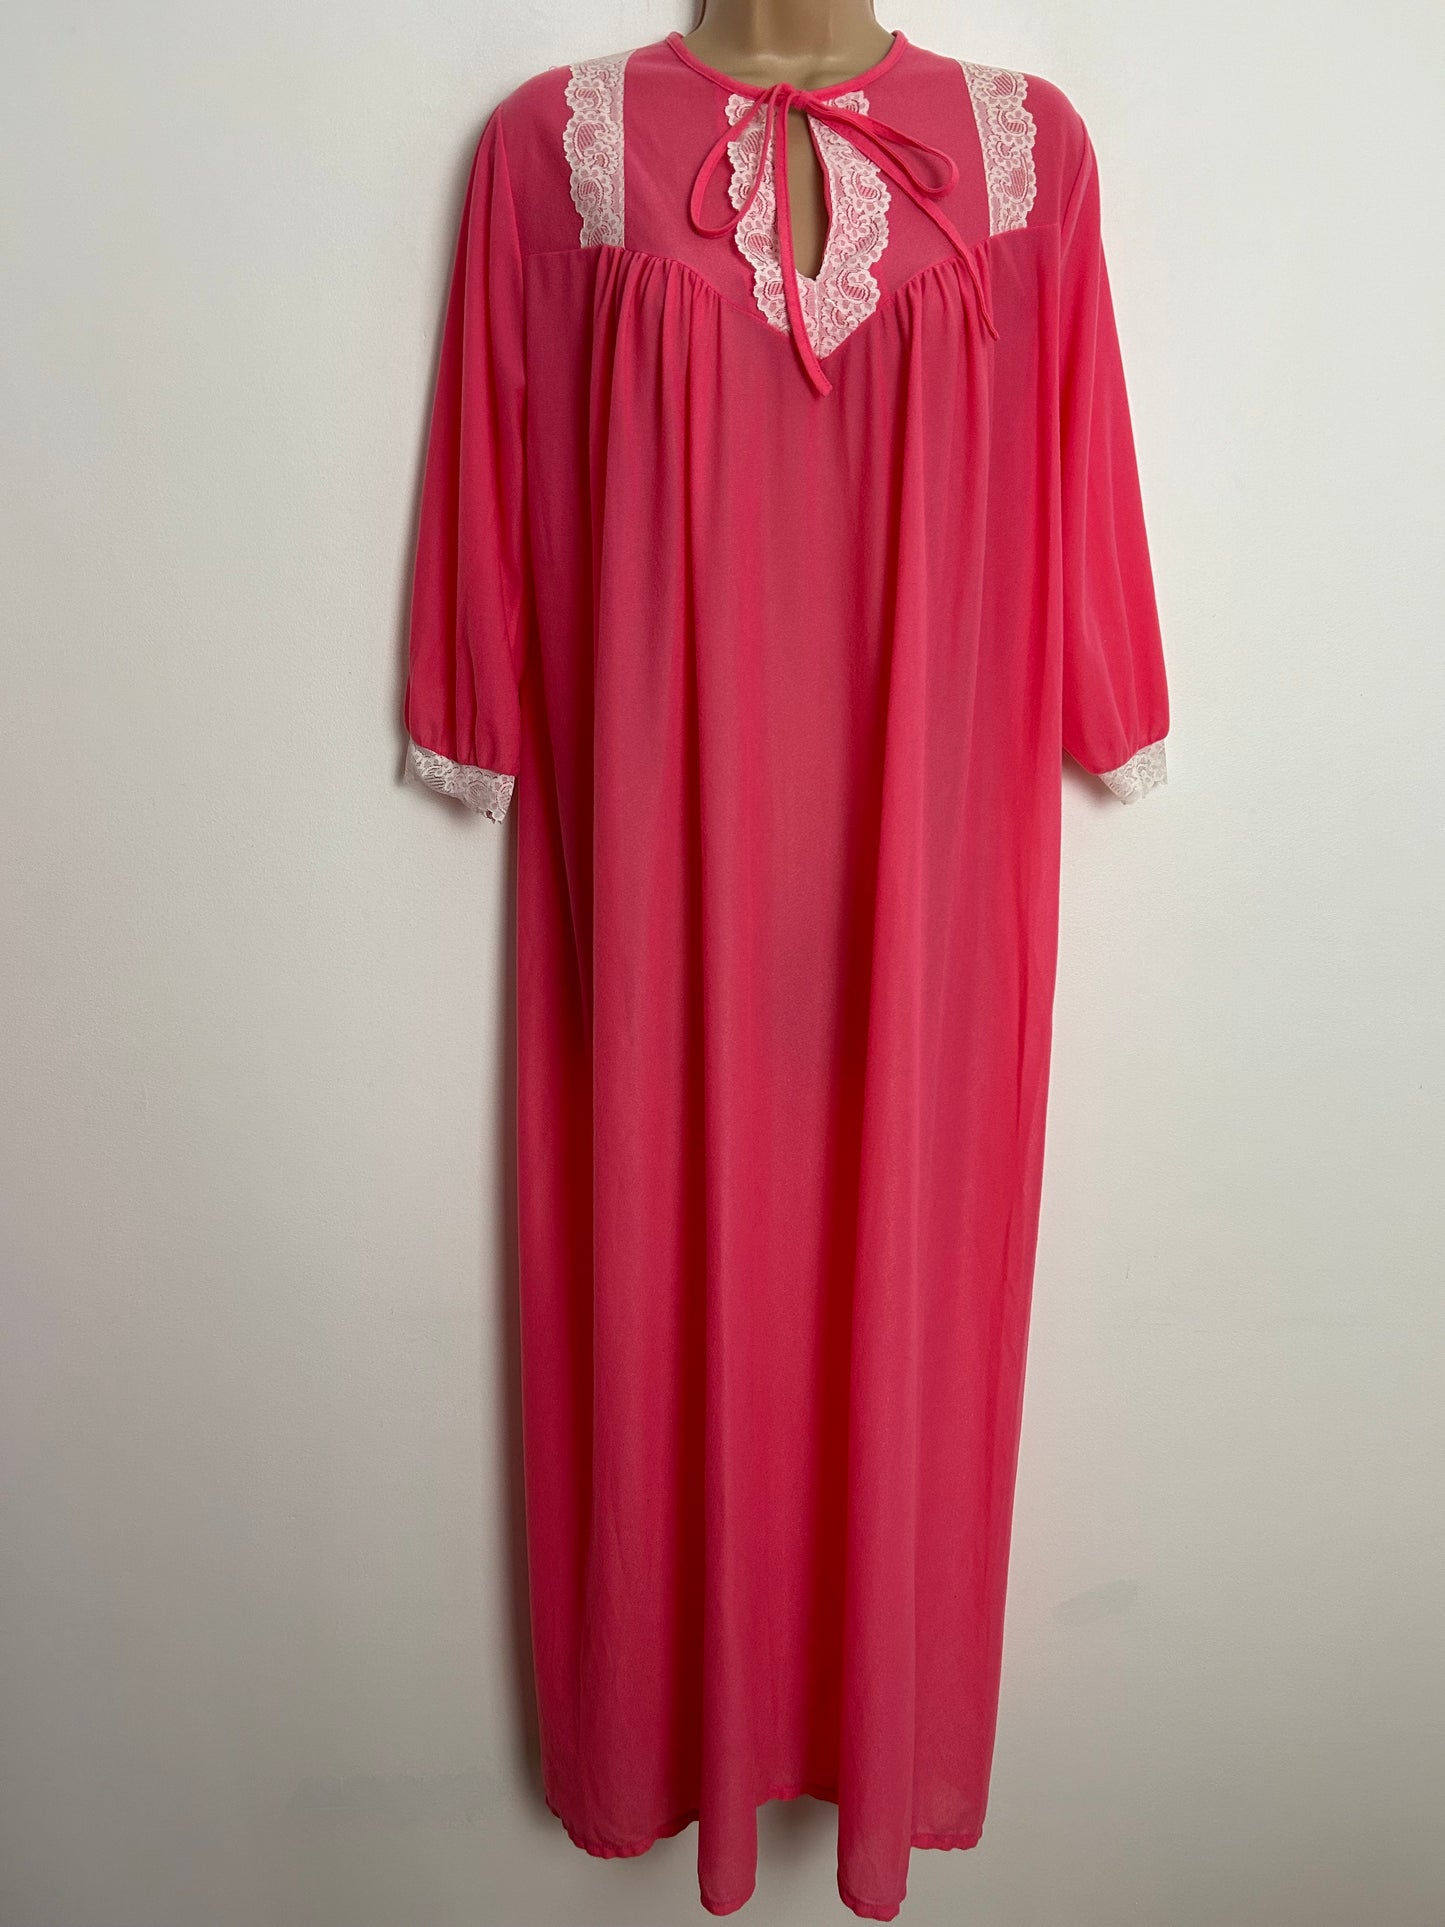 Vintage 1960s  UK Size 12-14 Candy Pink Lace Trim Tie Neck Brushed Nylon 3/4 Sleeve Full Length Nightie Nightdress